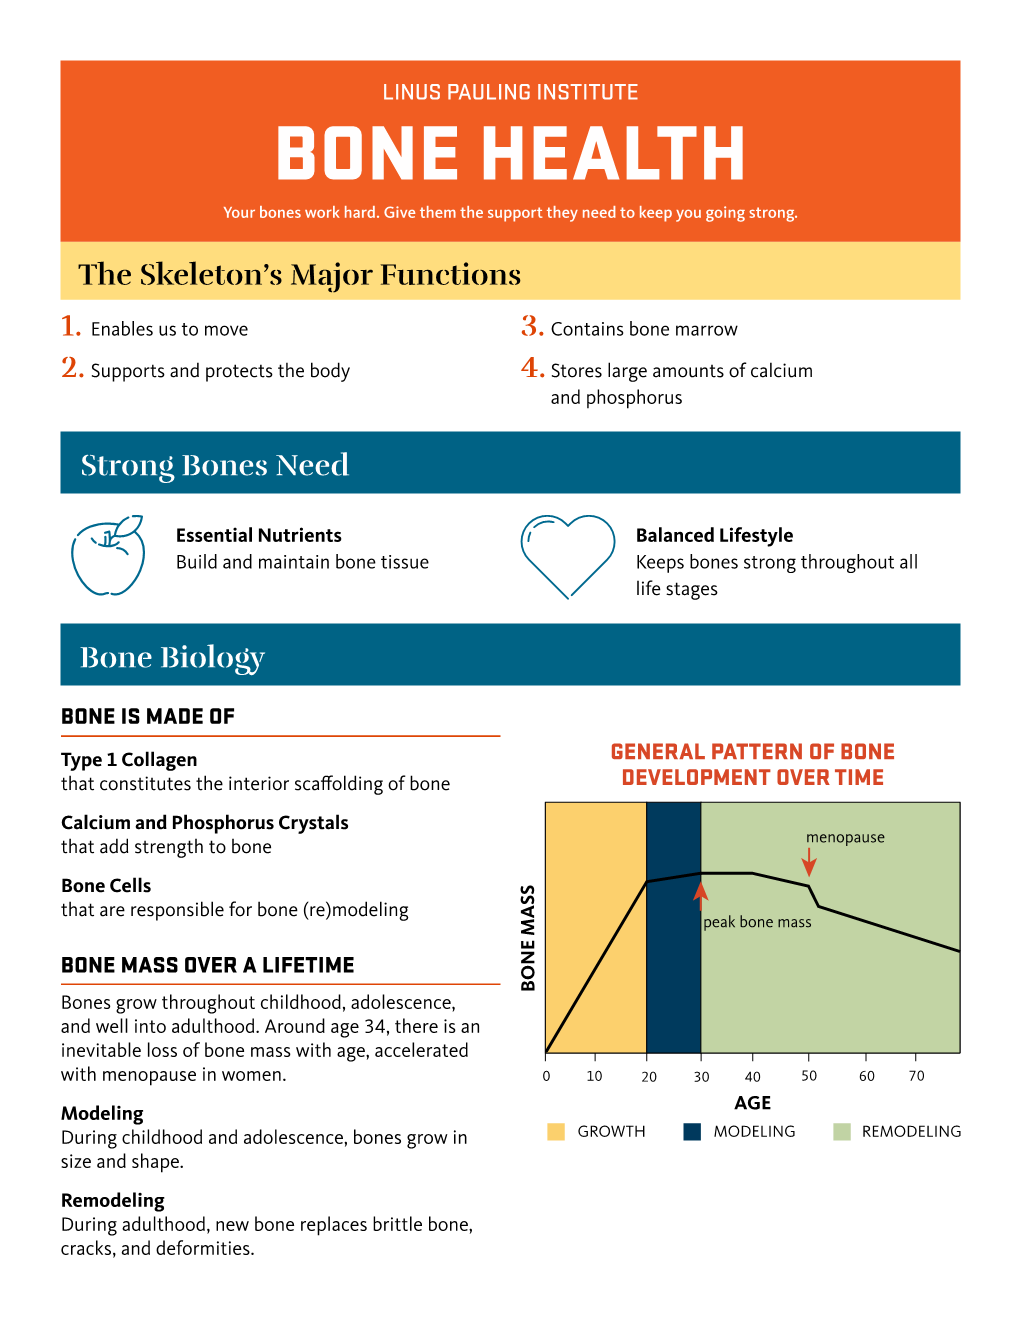 BONE HEALTH Your Bones Work Hard